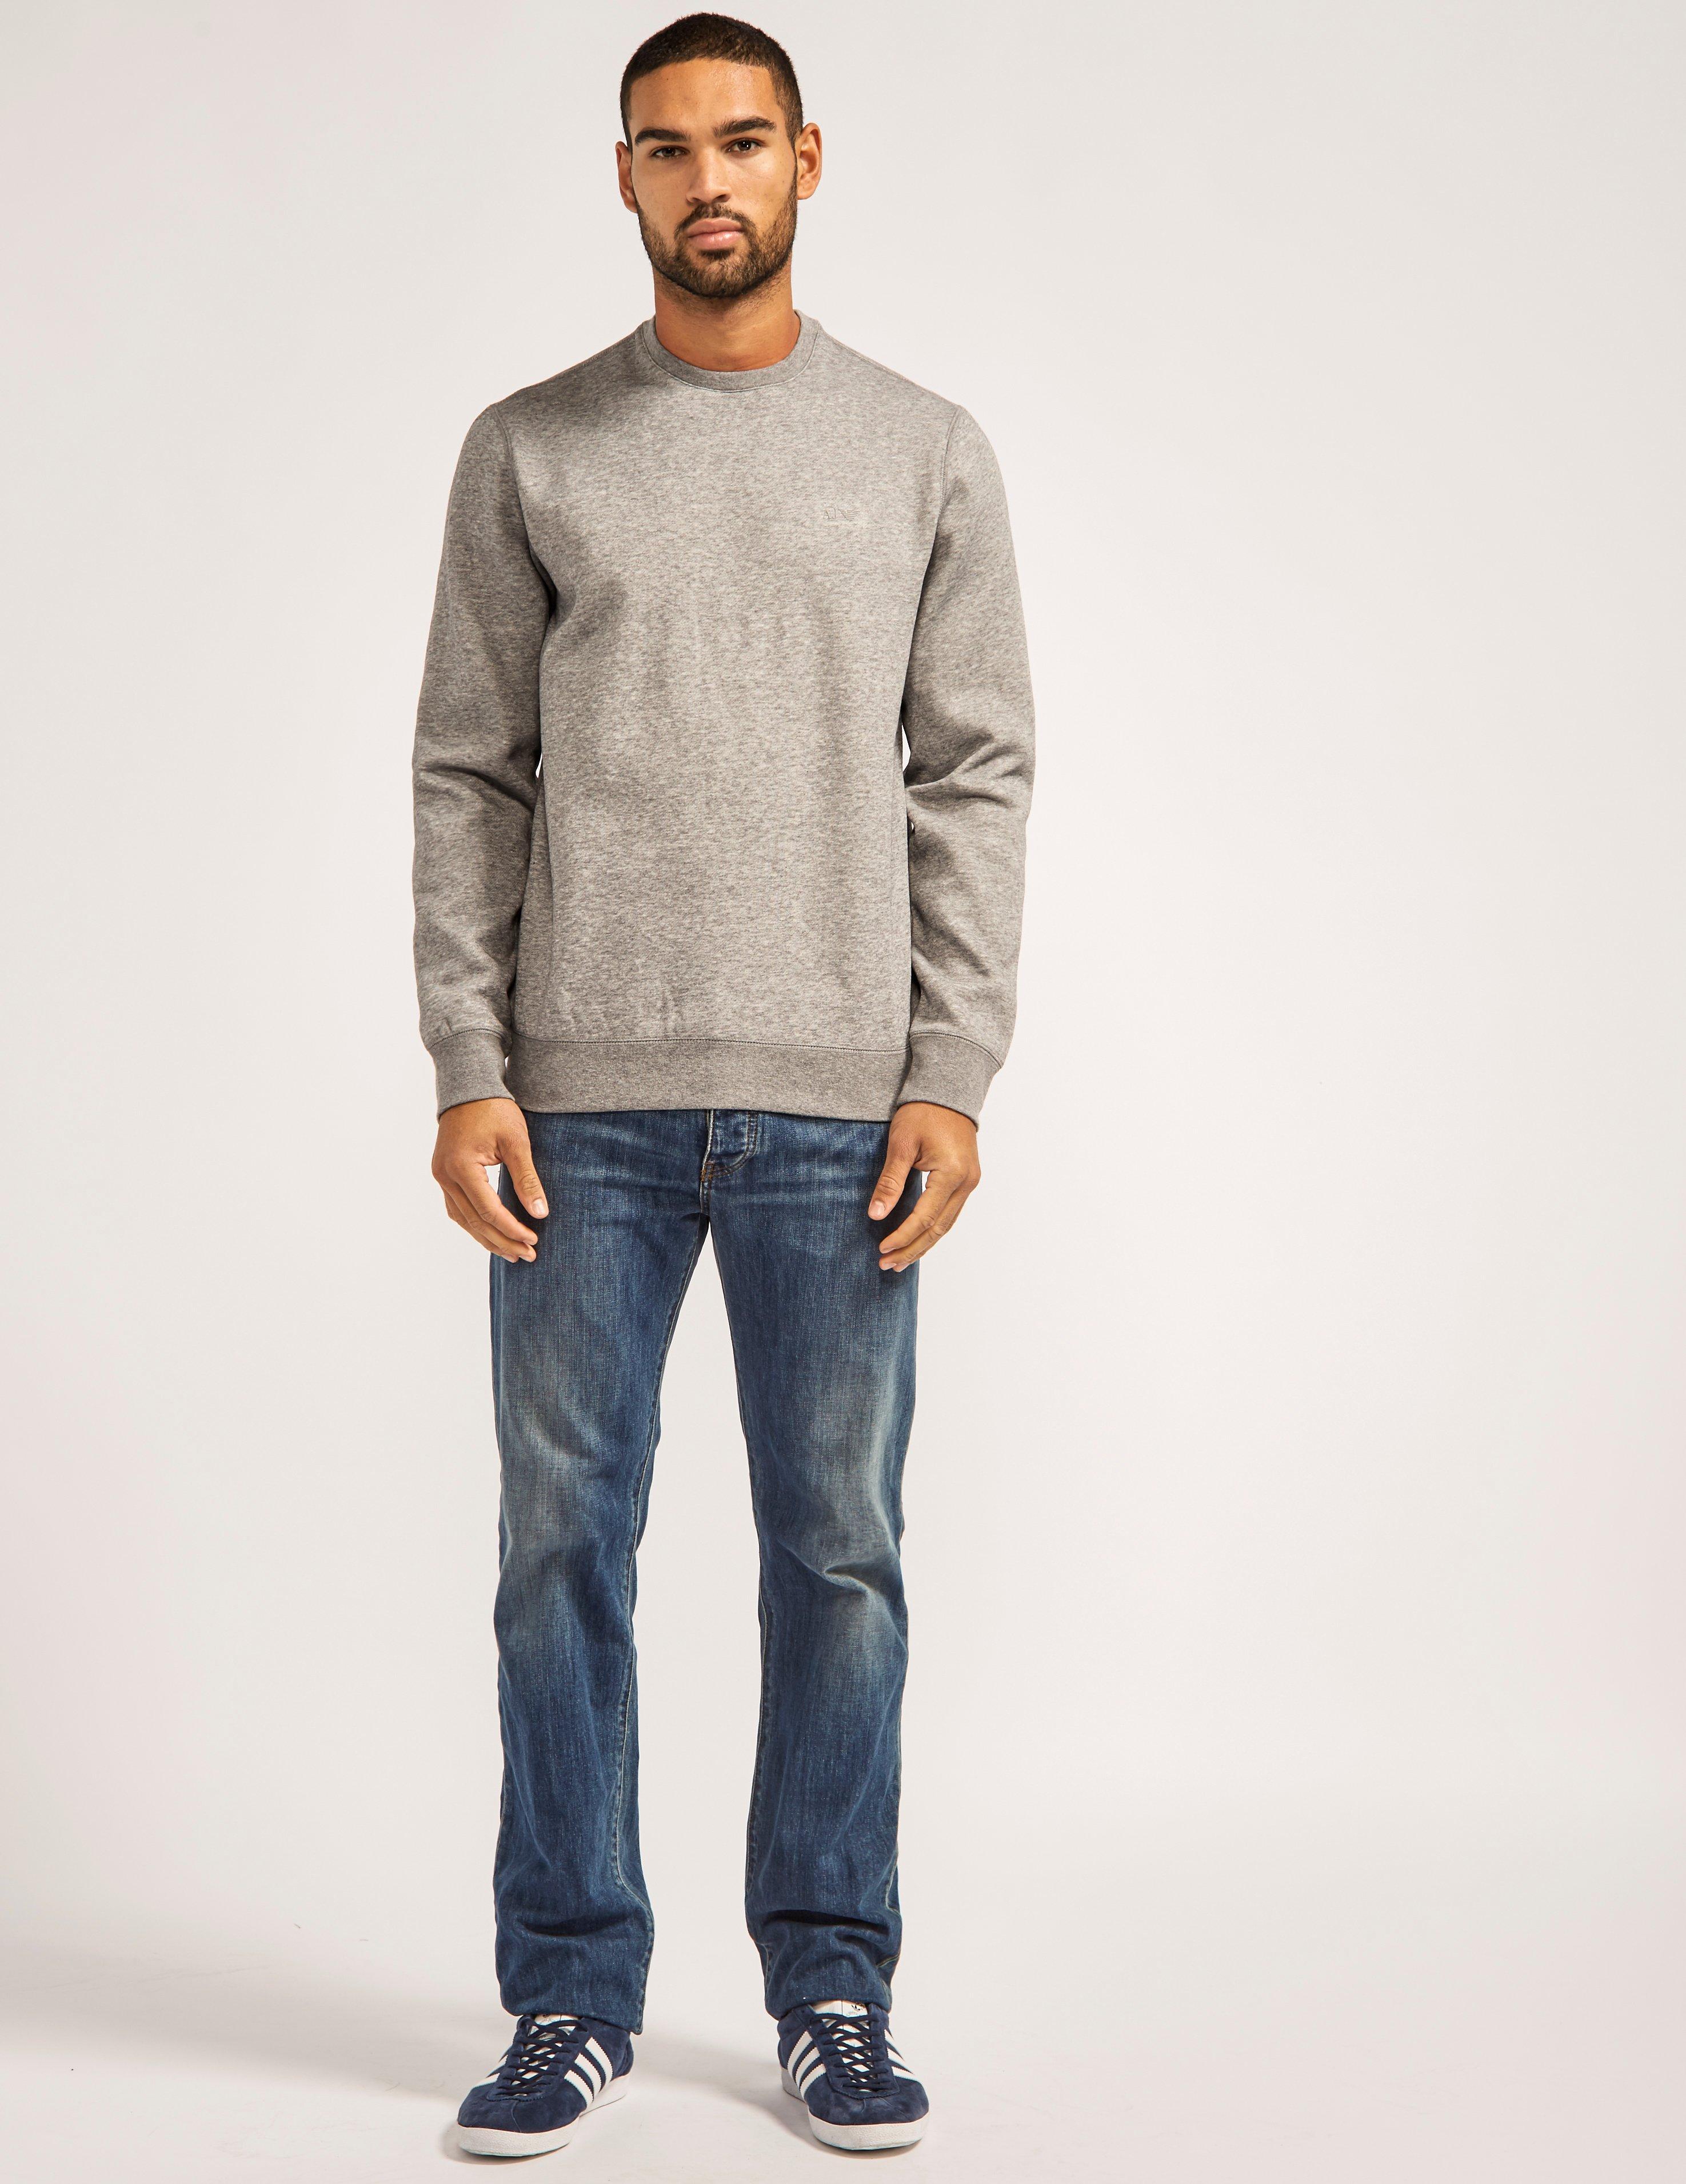 Lyst - Armani jeans Crew Neck Sweatshirt in Gray for Men